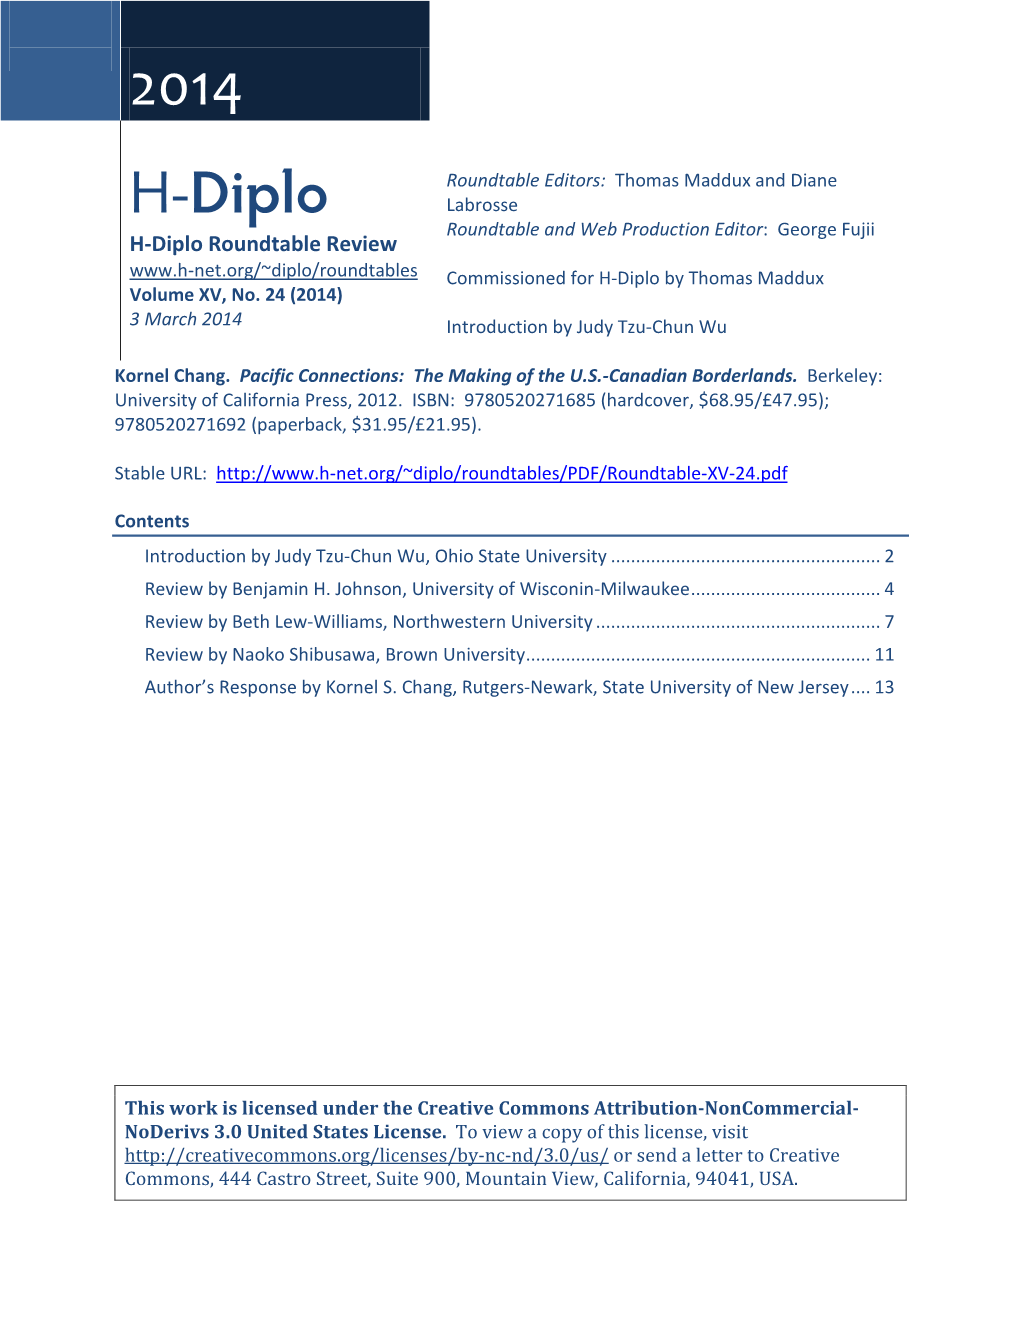 H-Diplo Roundtable, Vol. XV, No. 24